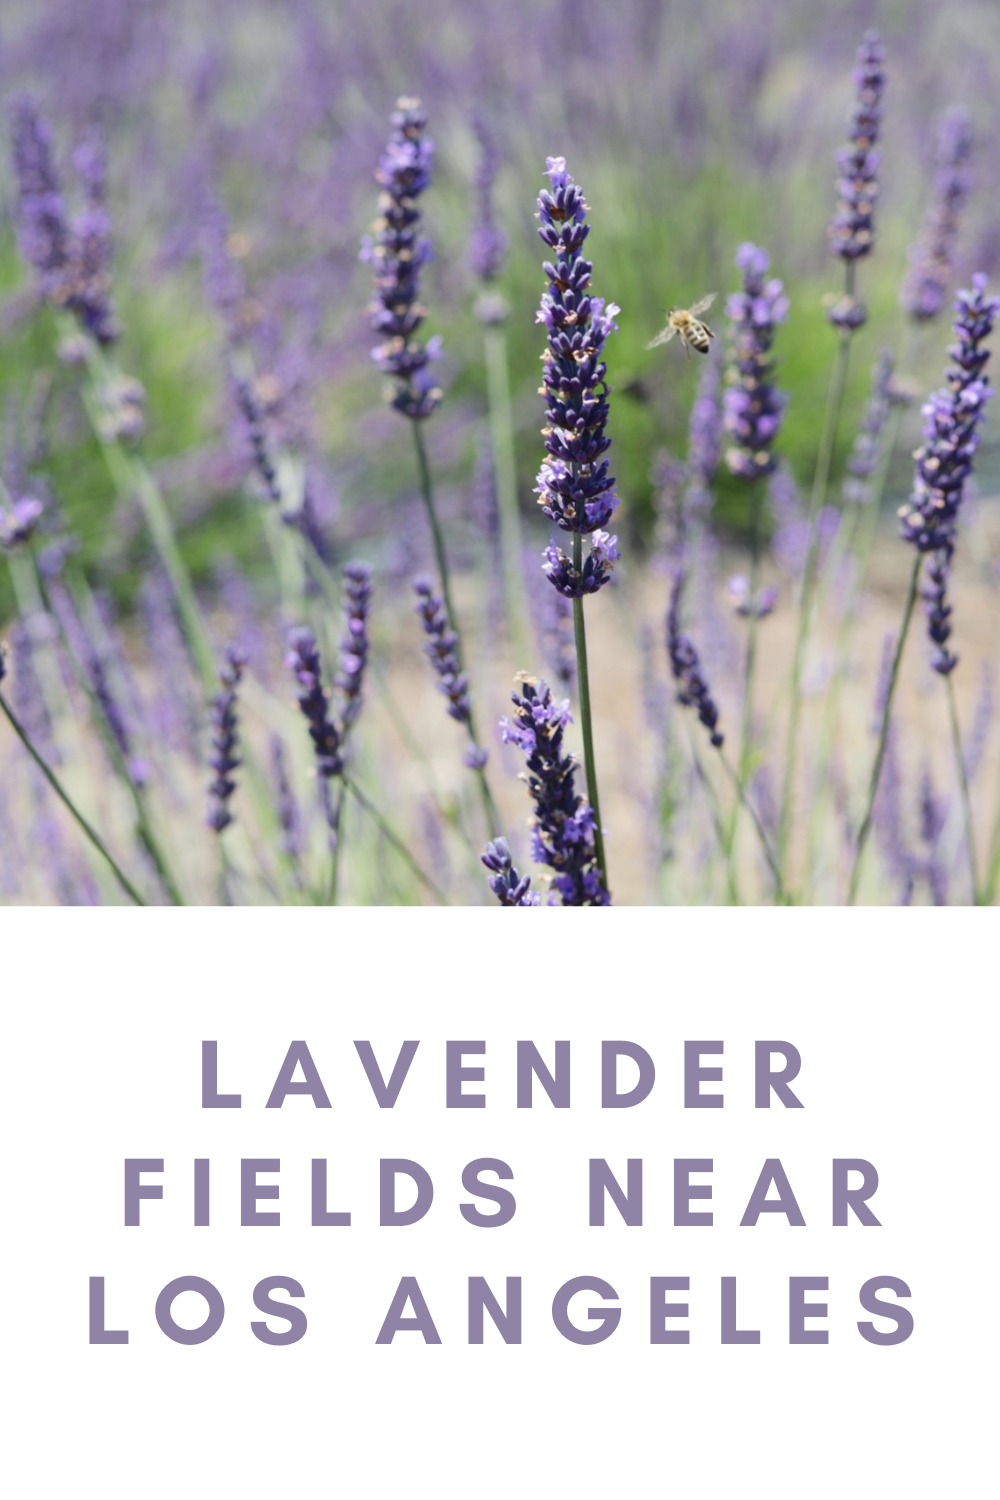 lavender fields near los angeles, u-pick lavender, golden state apothecary, santa rita hills lavender farm, lompoc, where to pick lavender in la, lments of style, la blogger, 123 farm, fork and plow